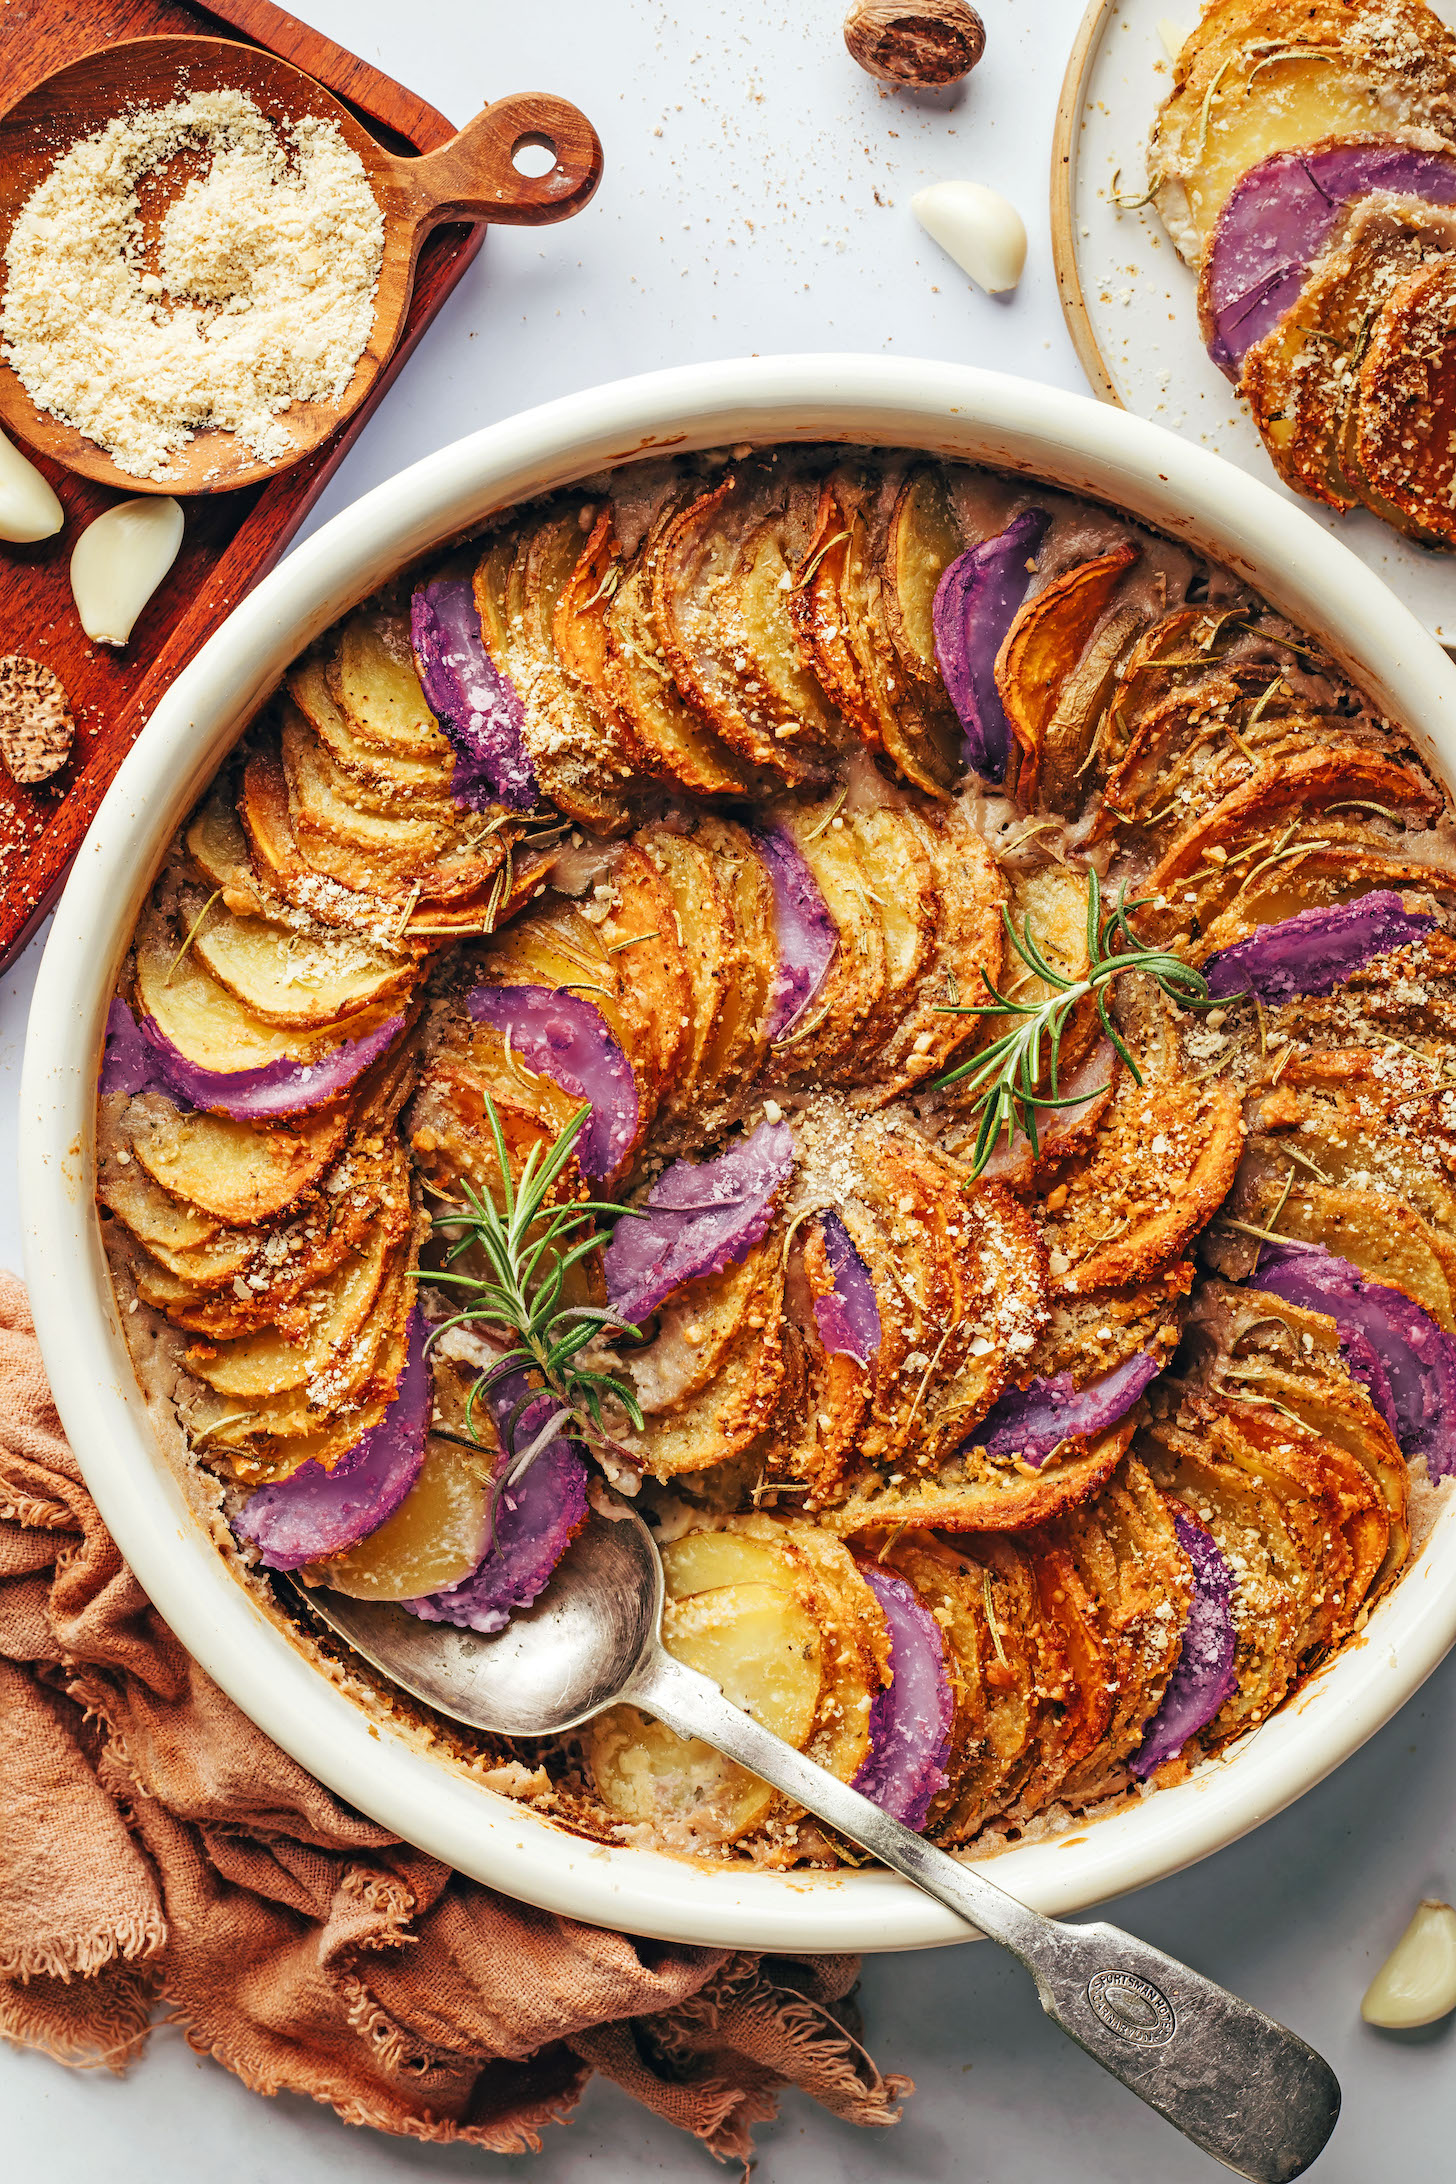 Circular baking dish filled with a vegan potato gratin arranged in a circular pattern